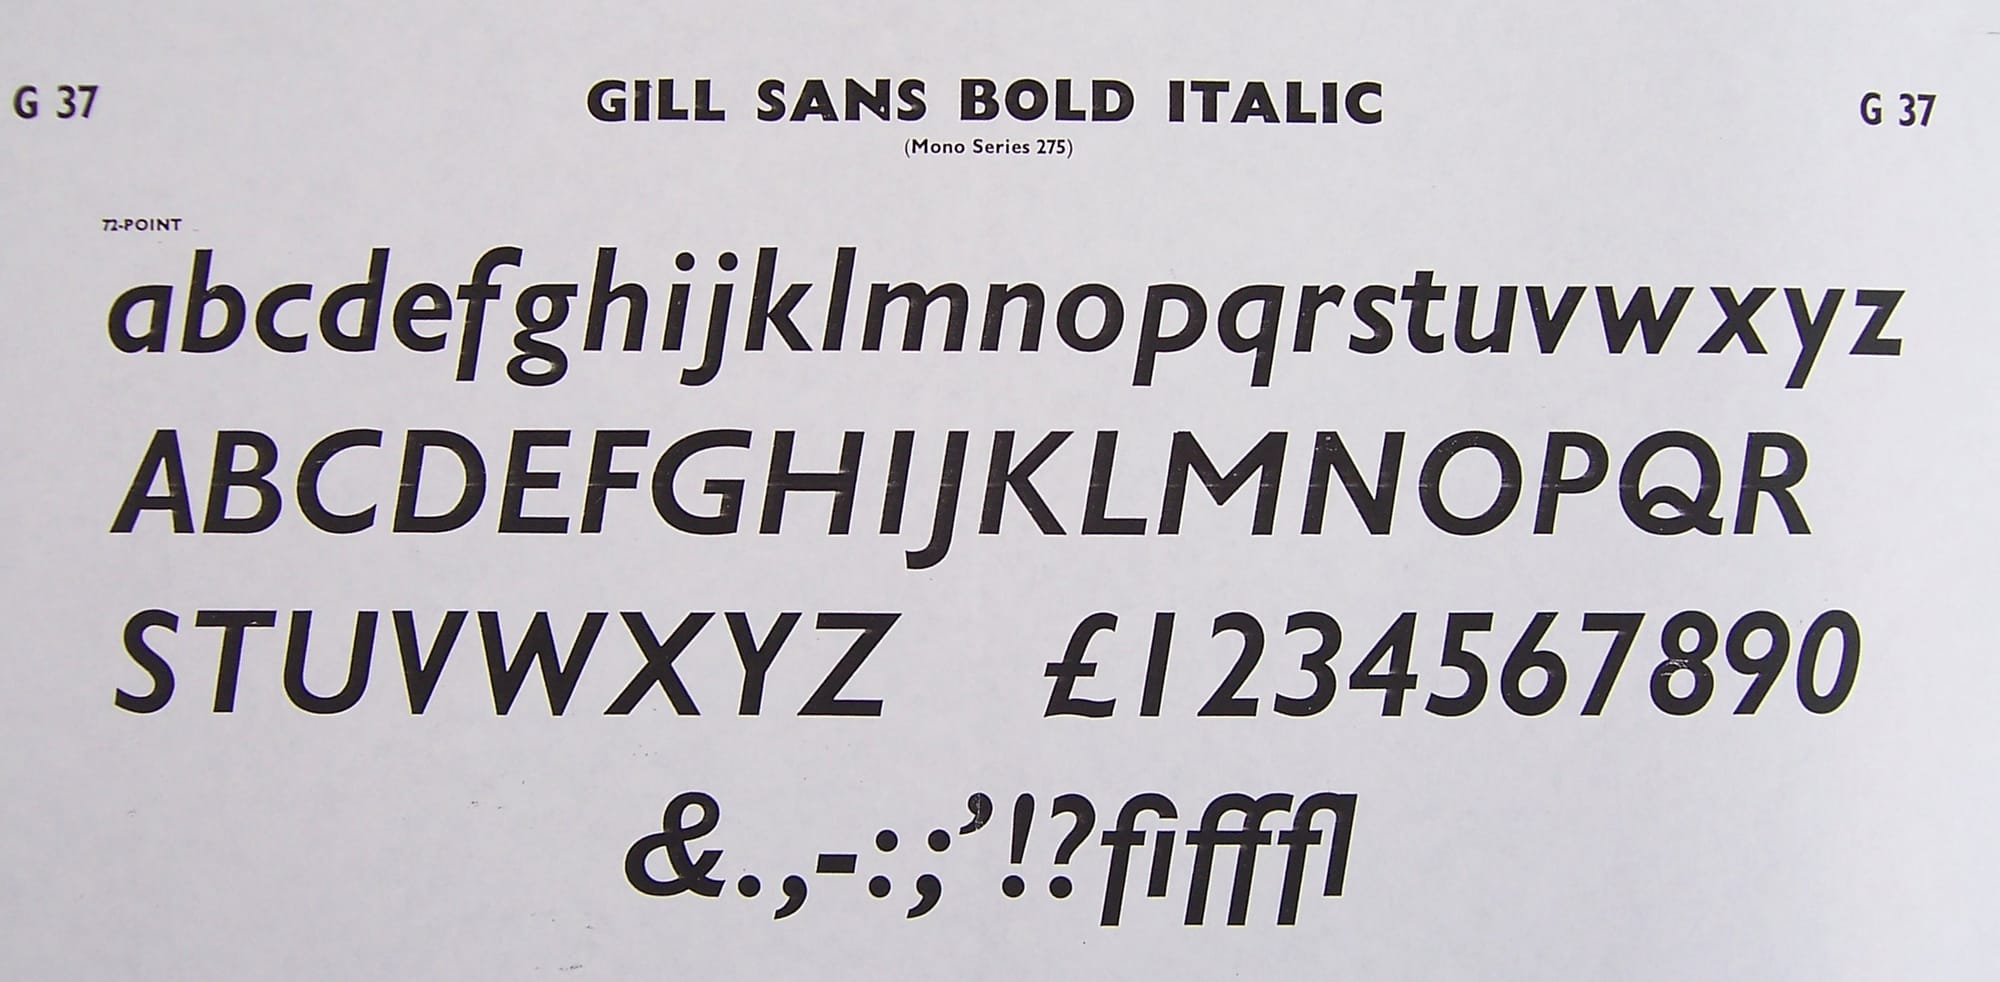 Gill Sans Bold Italic typeface